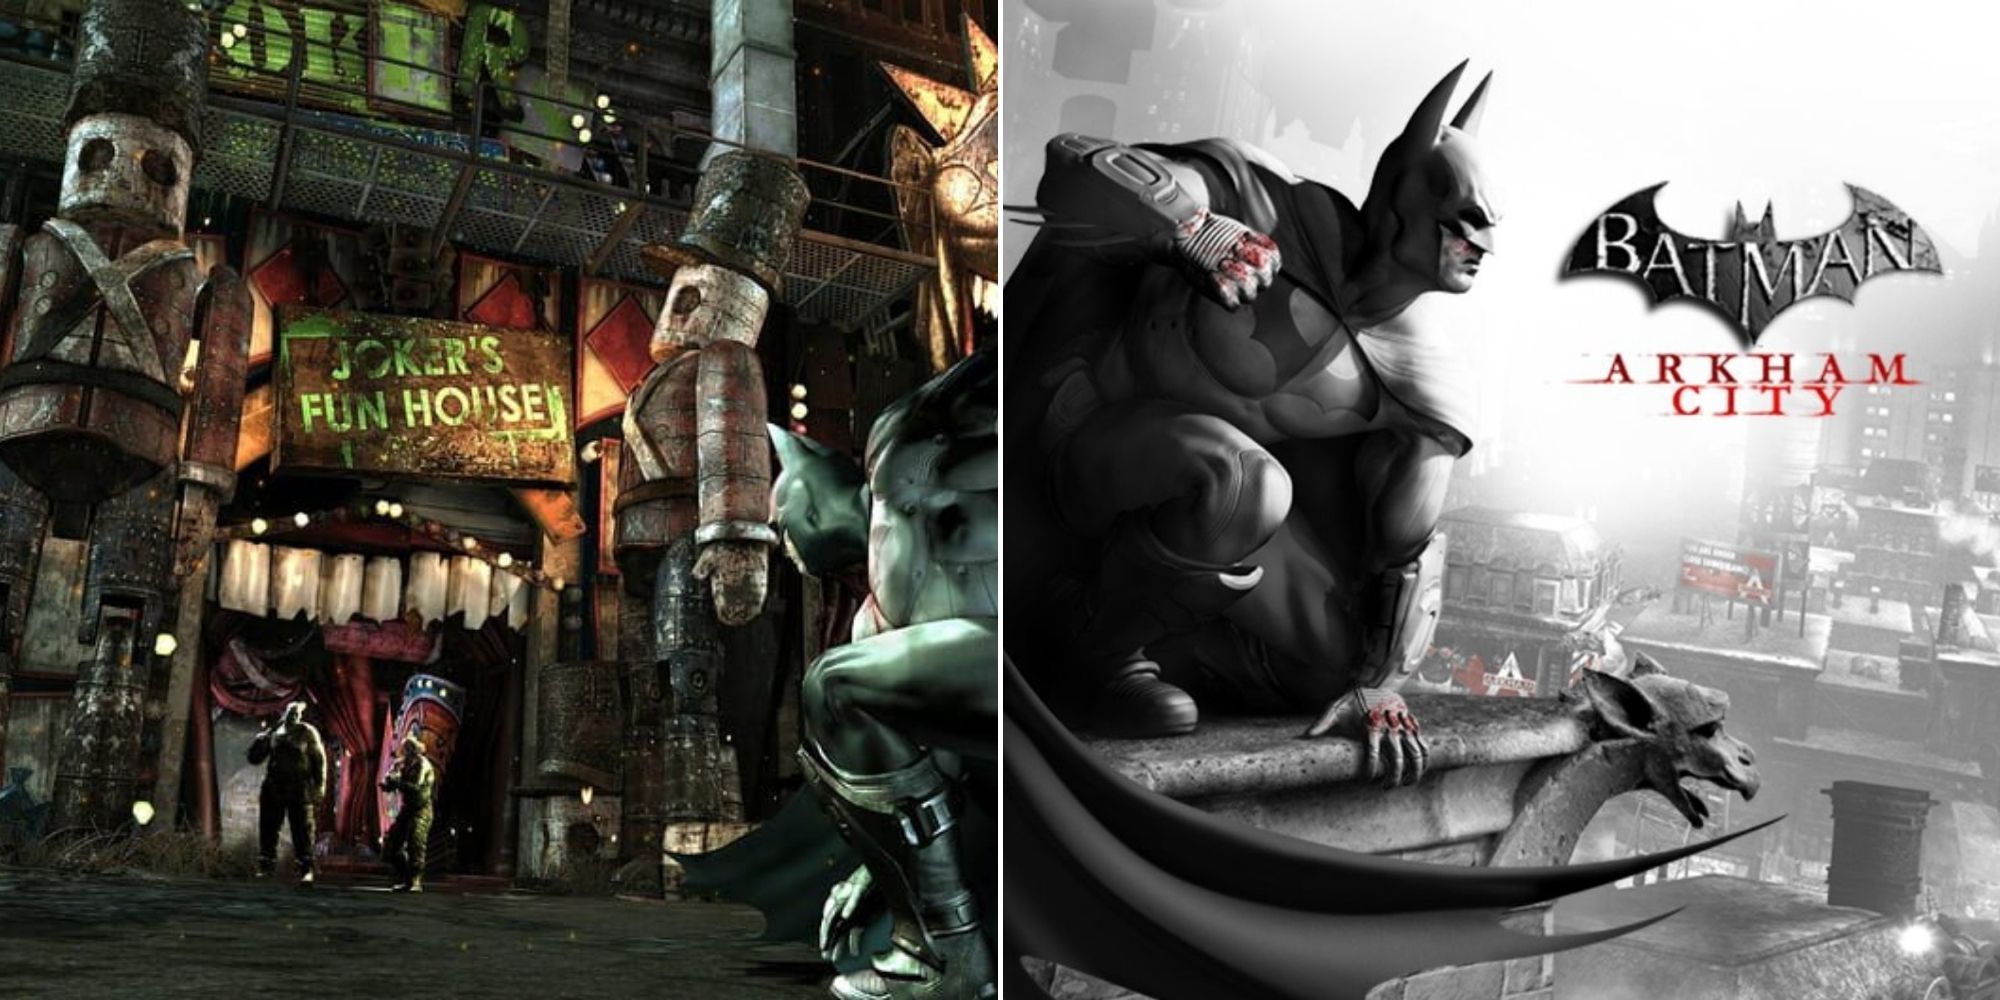 Batman Arkham City - Joker's Fun House - The Cover Art